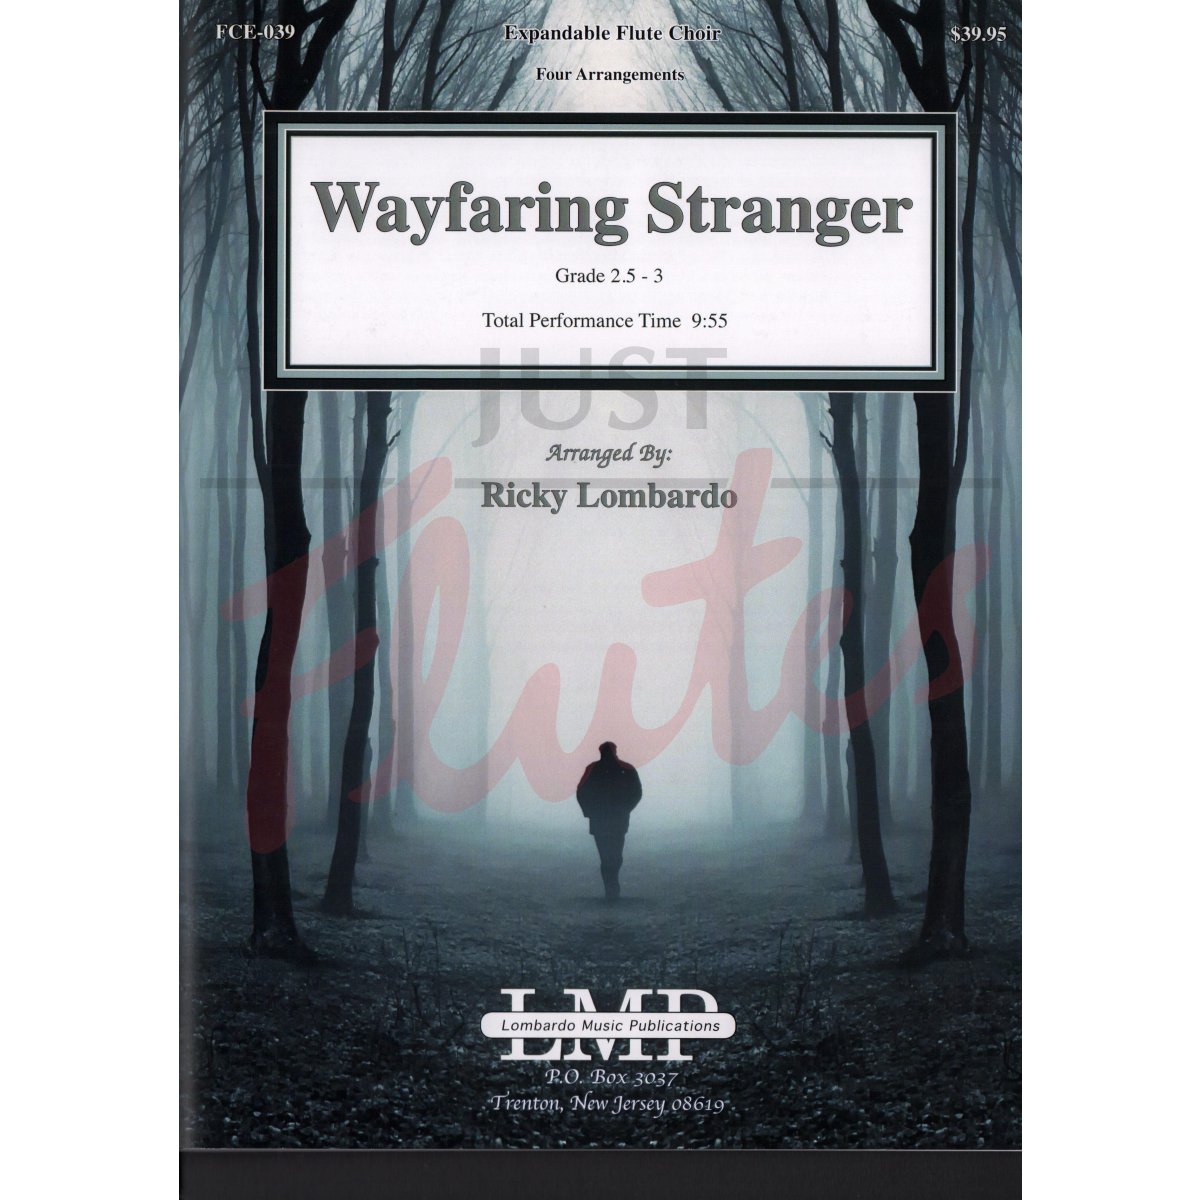 Wayfaring Stranger (4 arrangements) for Expanable Flute Choir